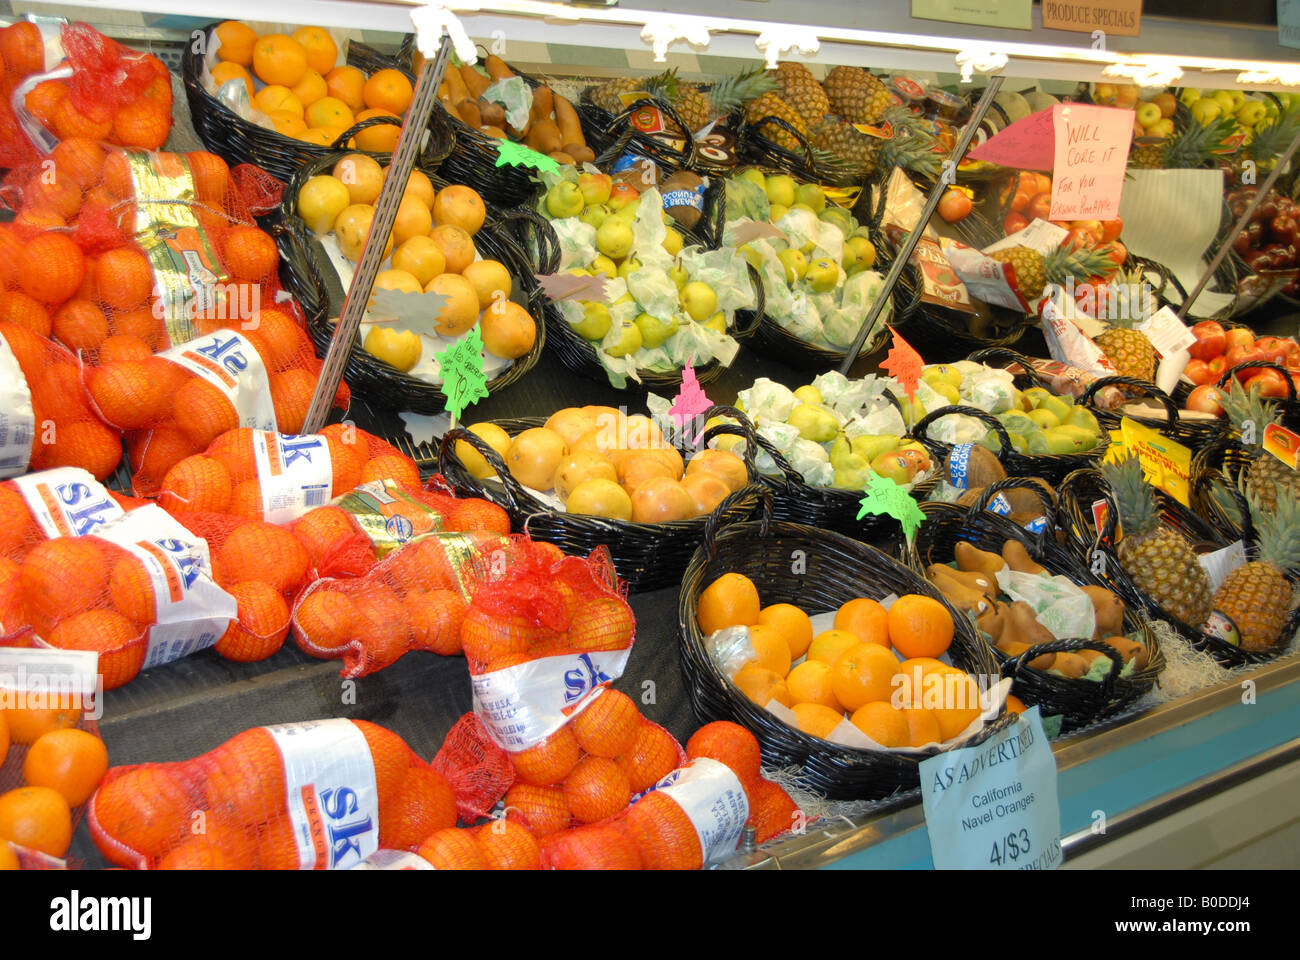 https://c8.alamy.com/comp/B0DDJ4/a-row-of-fruit-in-the-produce-aisle-of-a-grocery-store-B0DDJ4.jpg